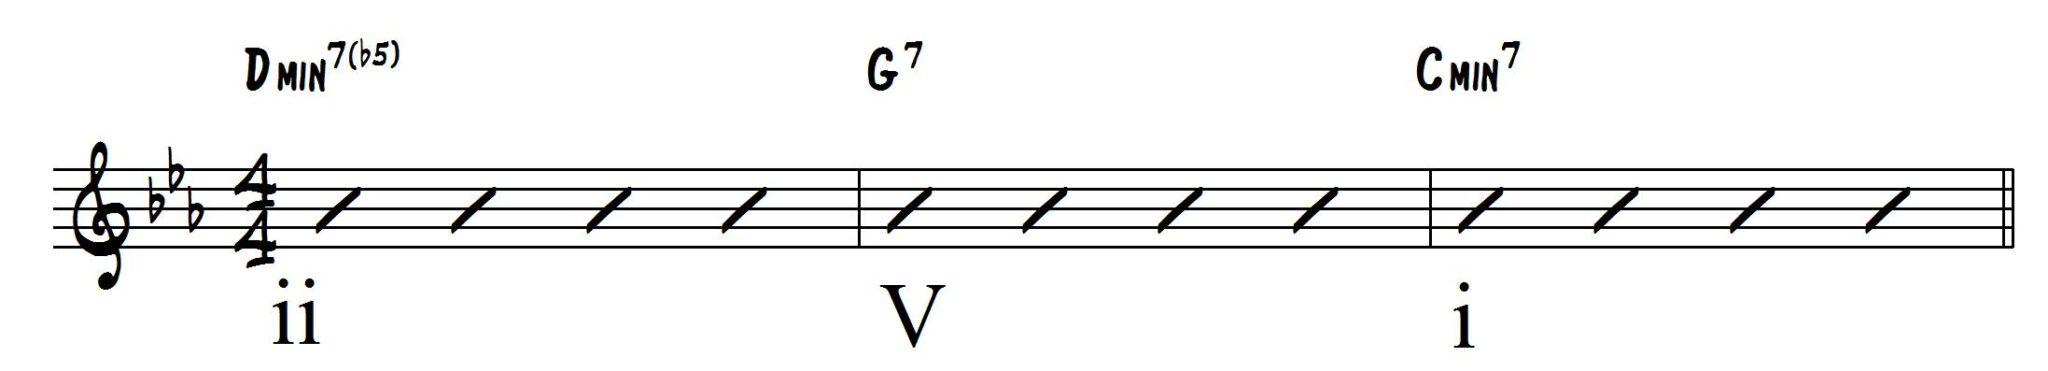 Minor ii-V-i Jazz Chord Progression